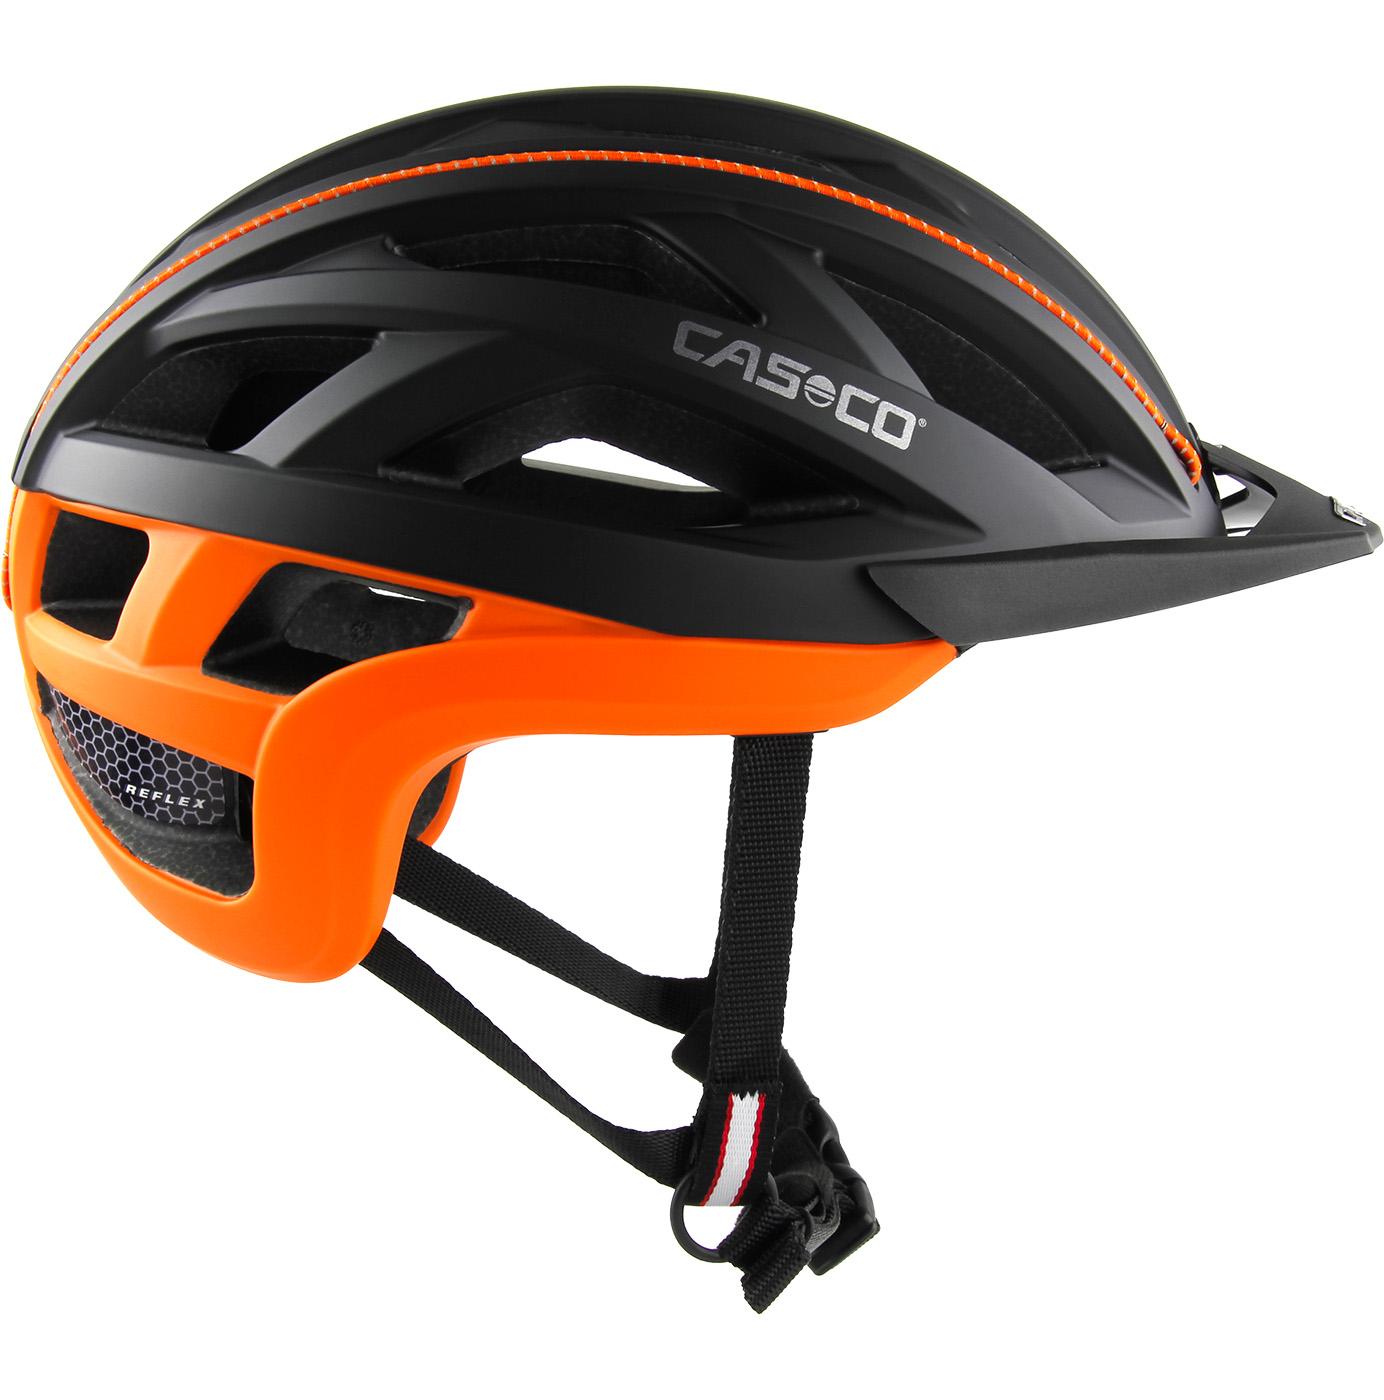 Casco Cuda 2 helmet